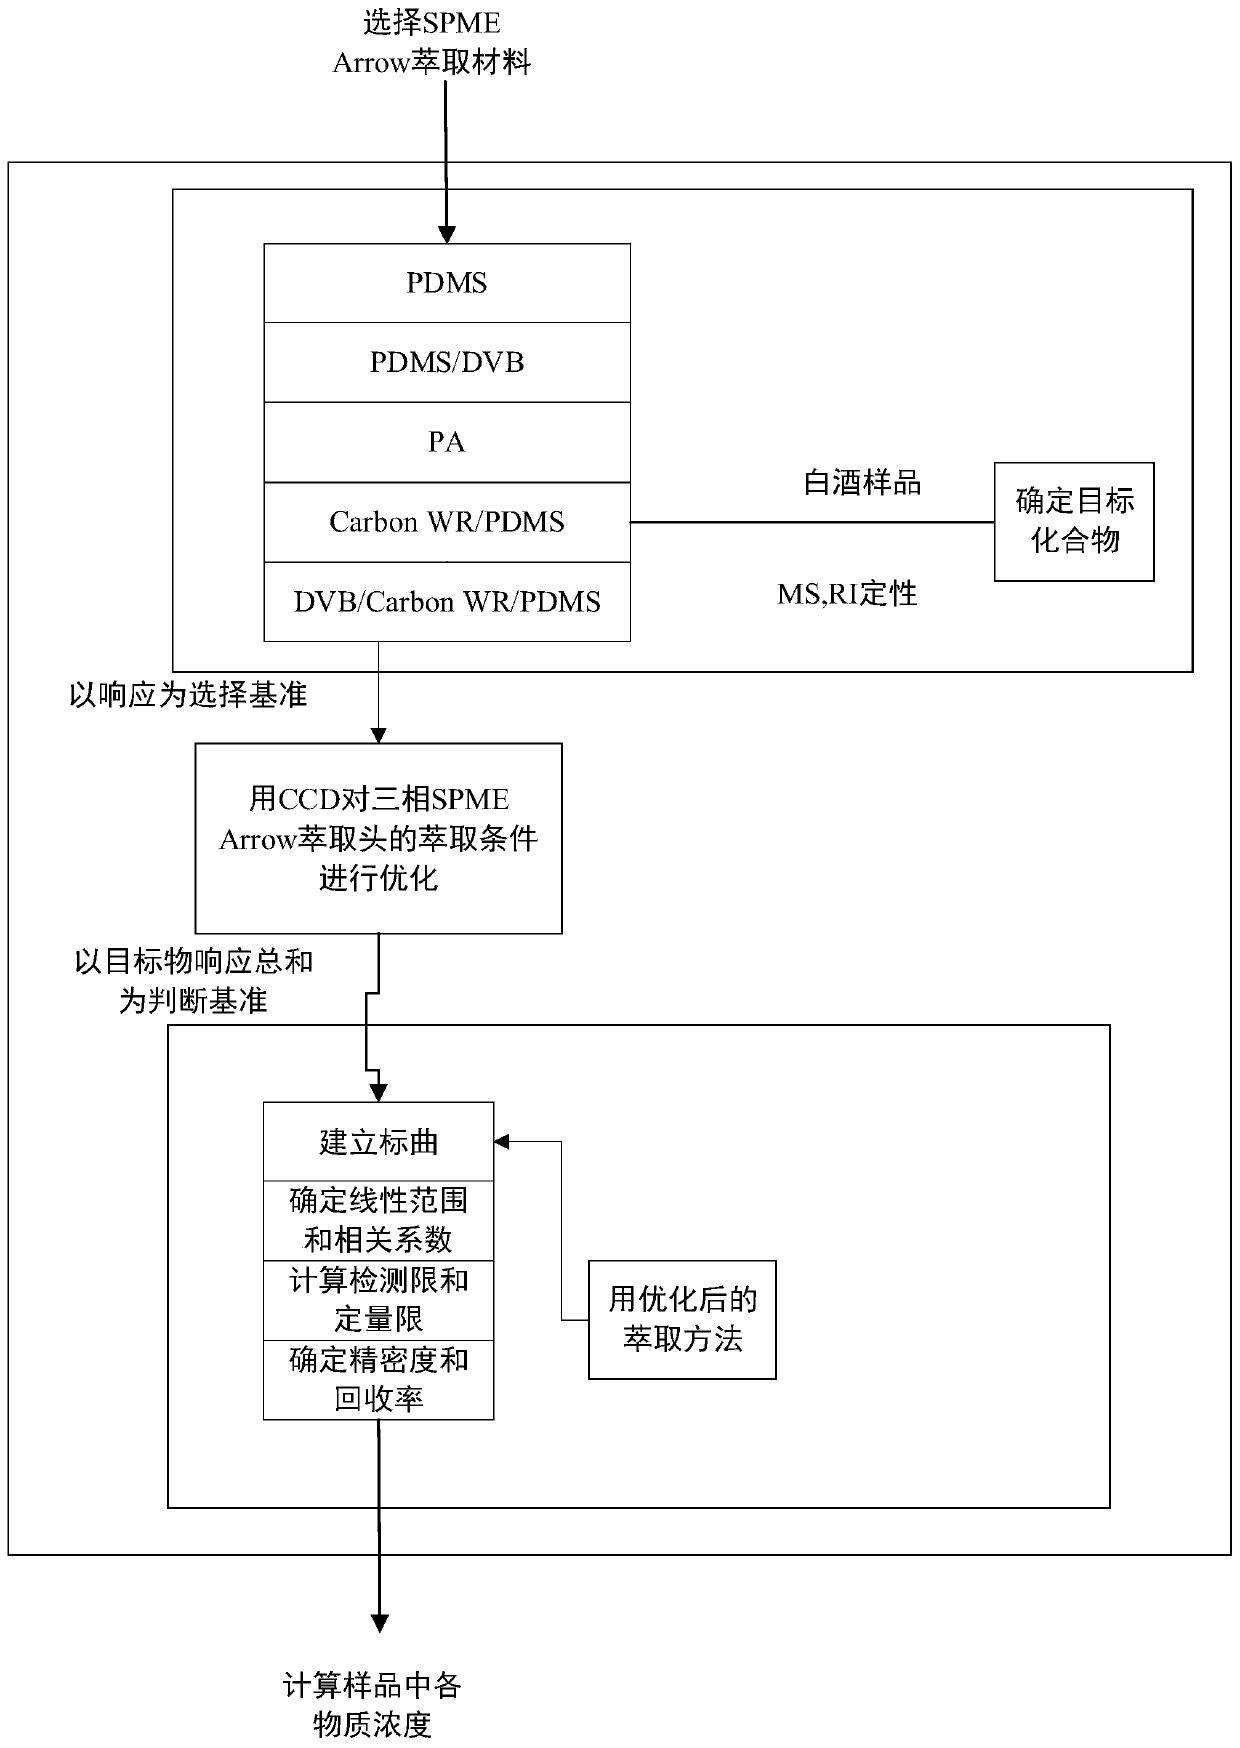 Quantitative detection method for aroma compounds in Baijiu